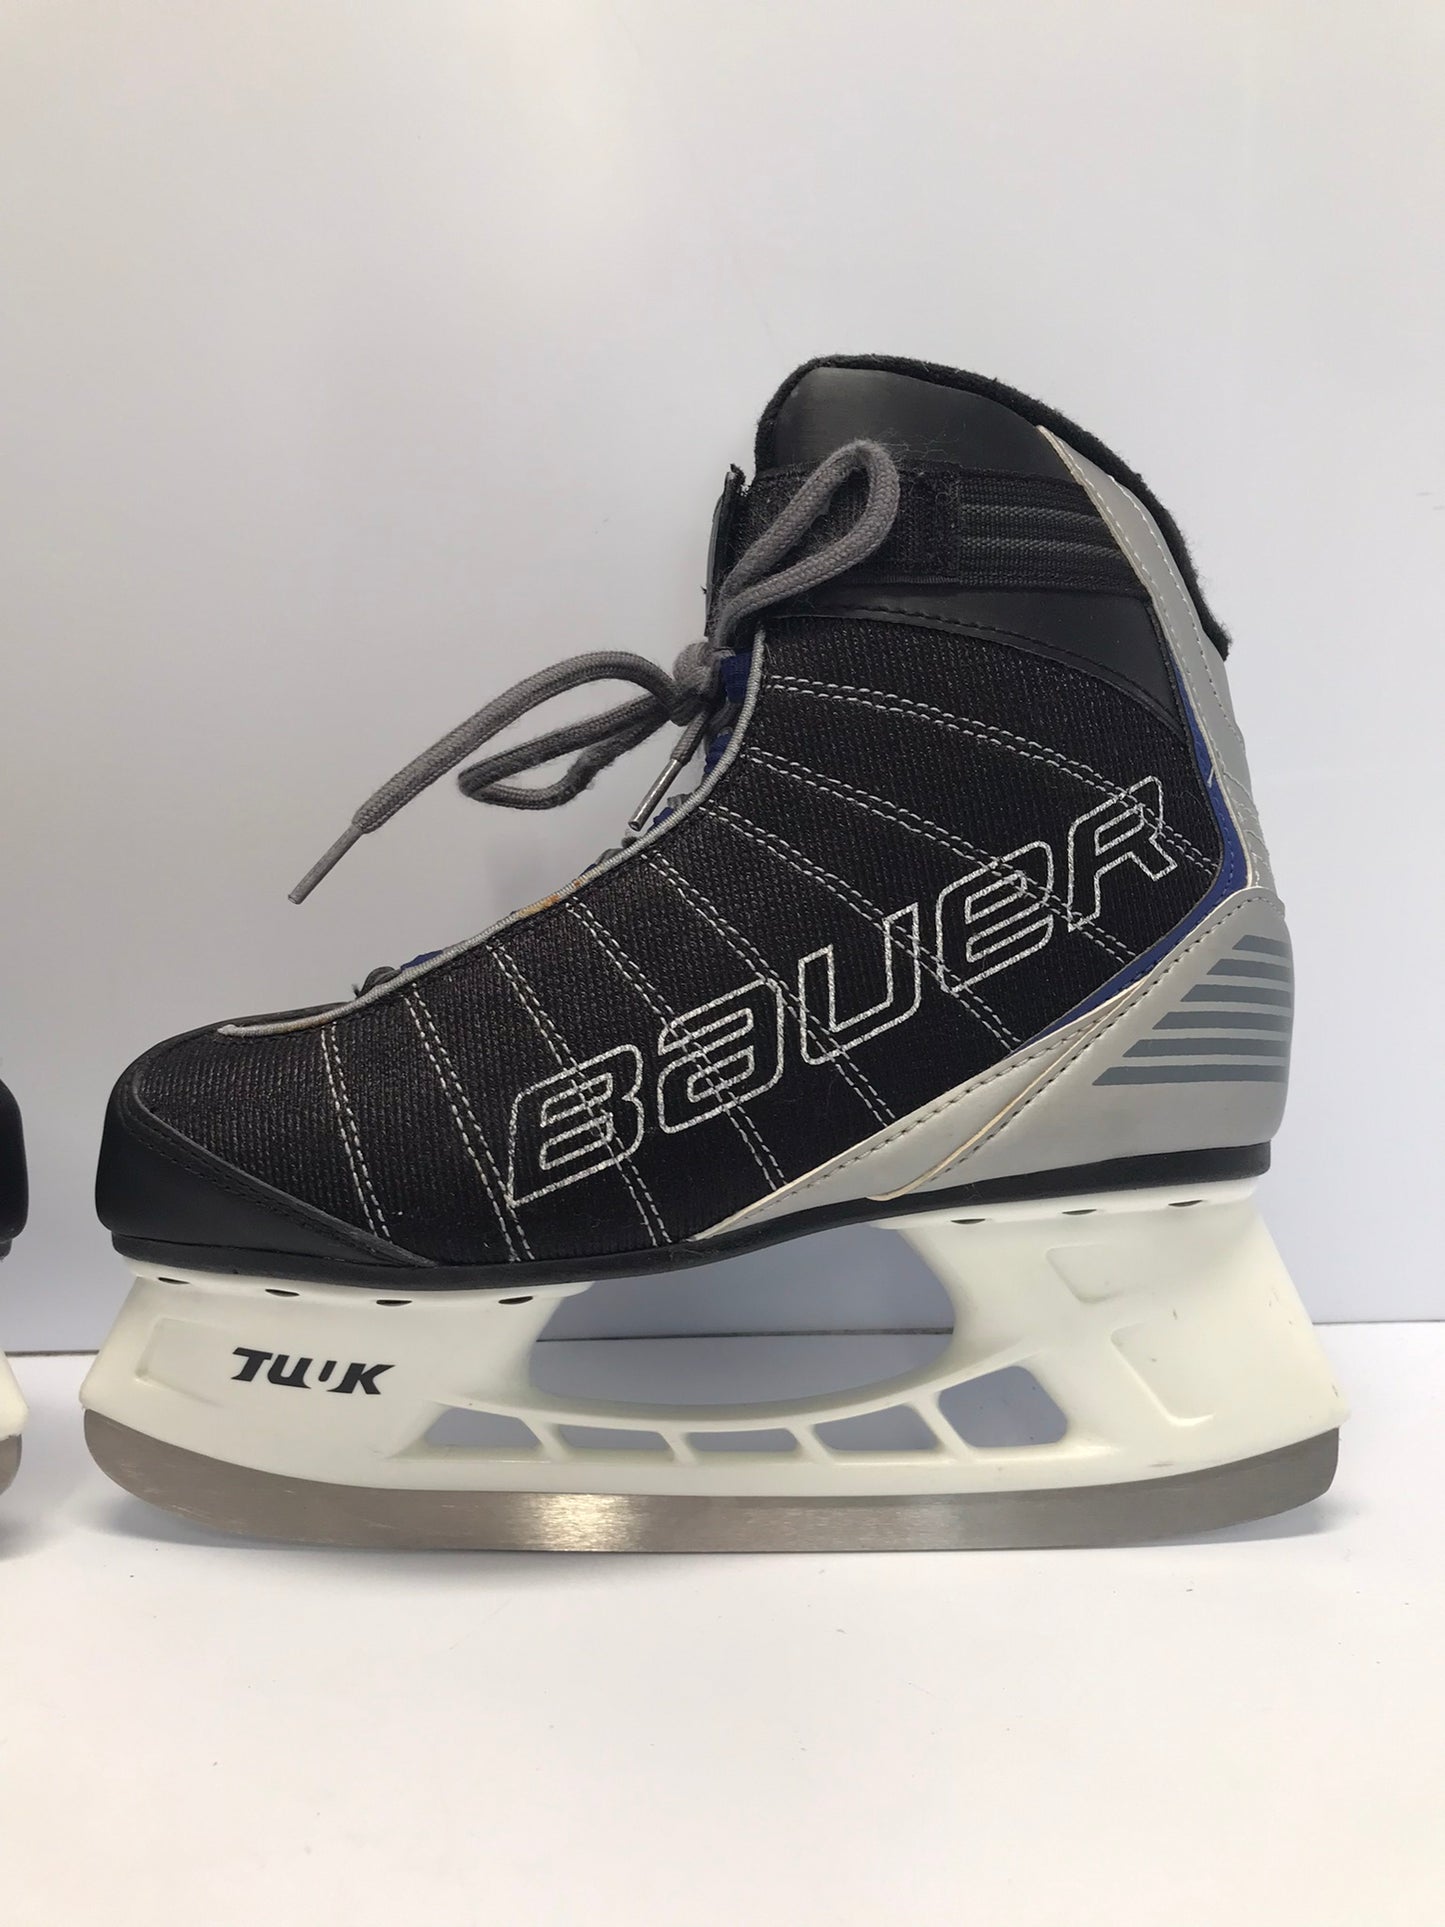 Hockey Skates Men's Size 7 Shoe Size Bauer Soft Skate Like New